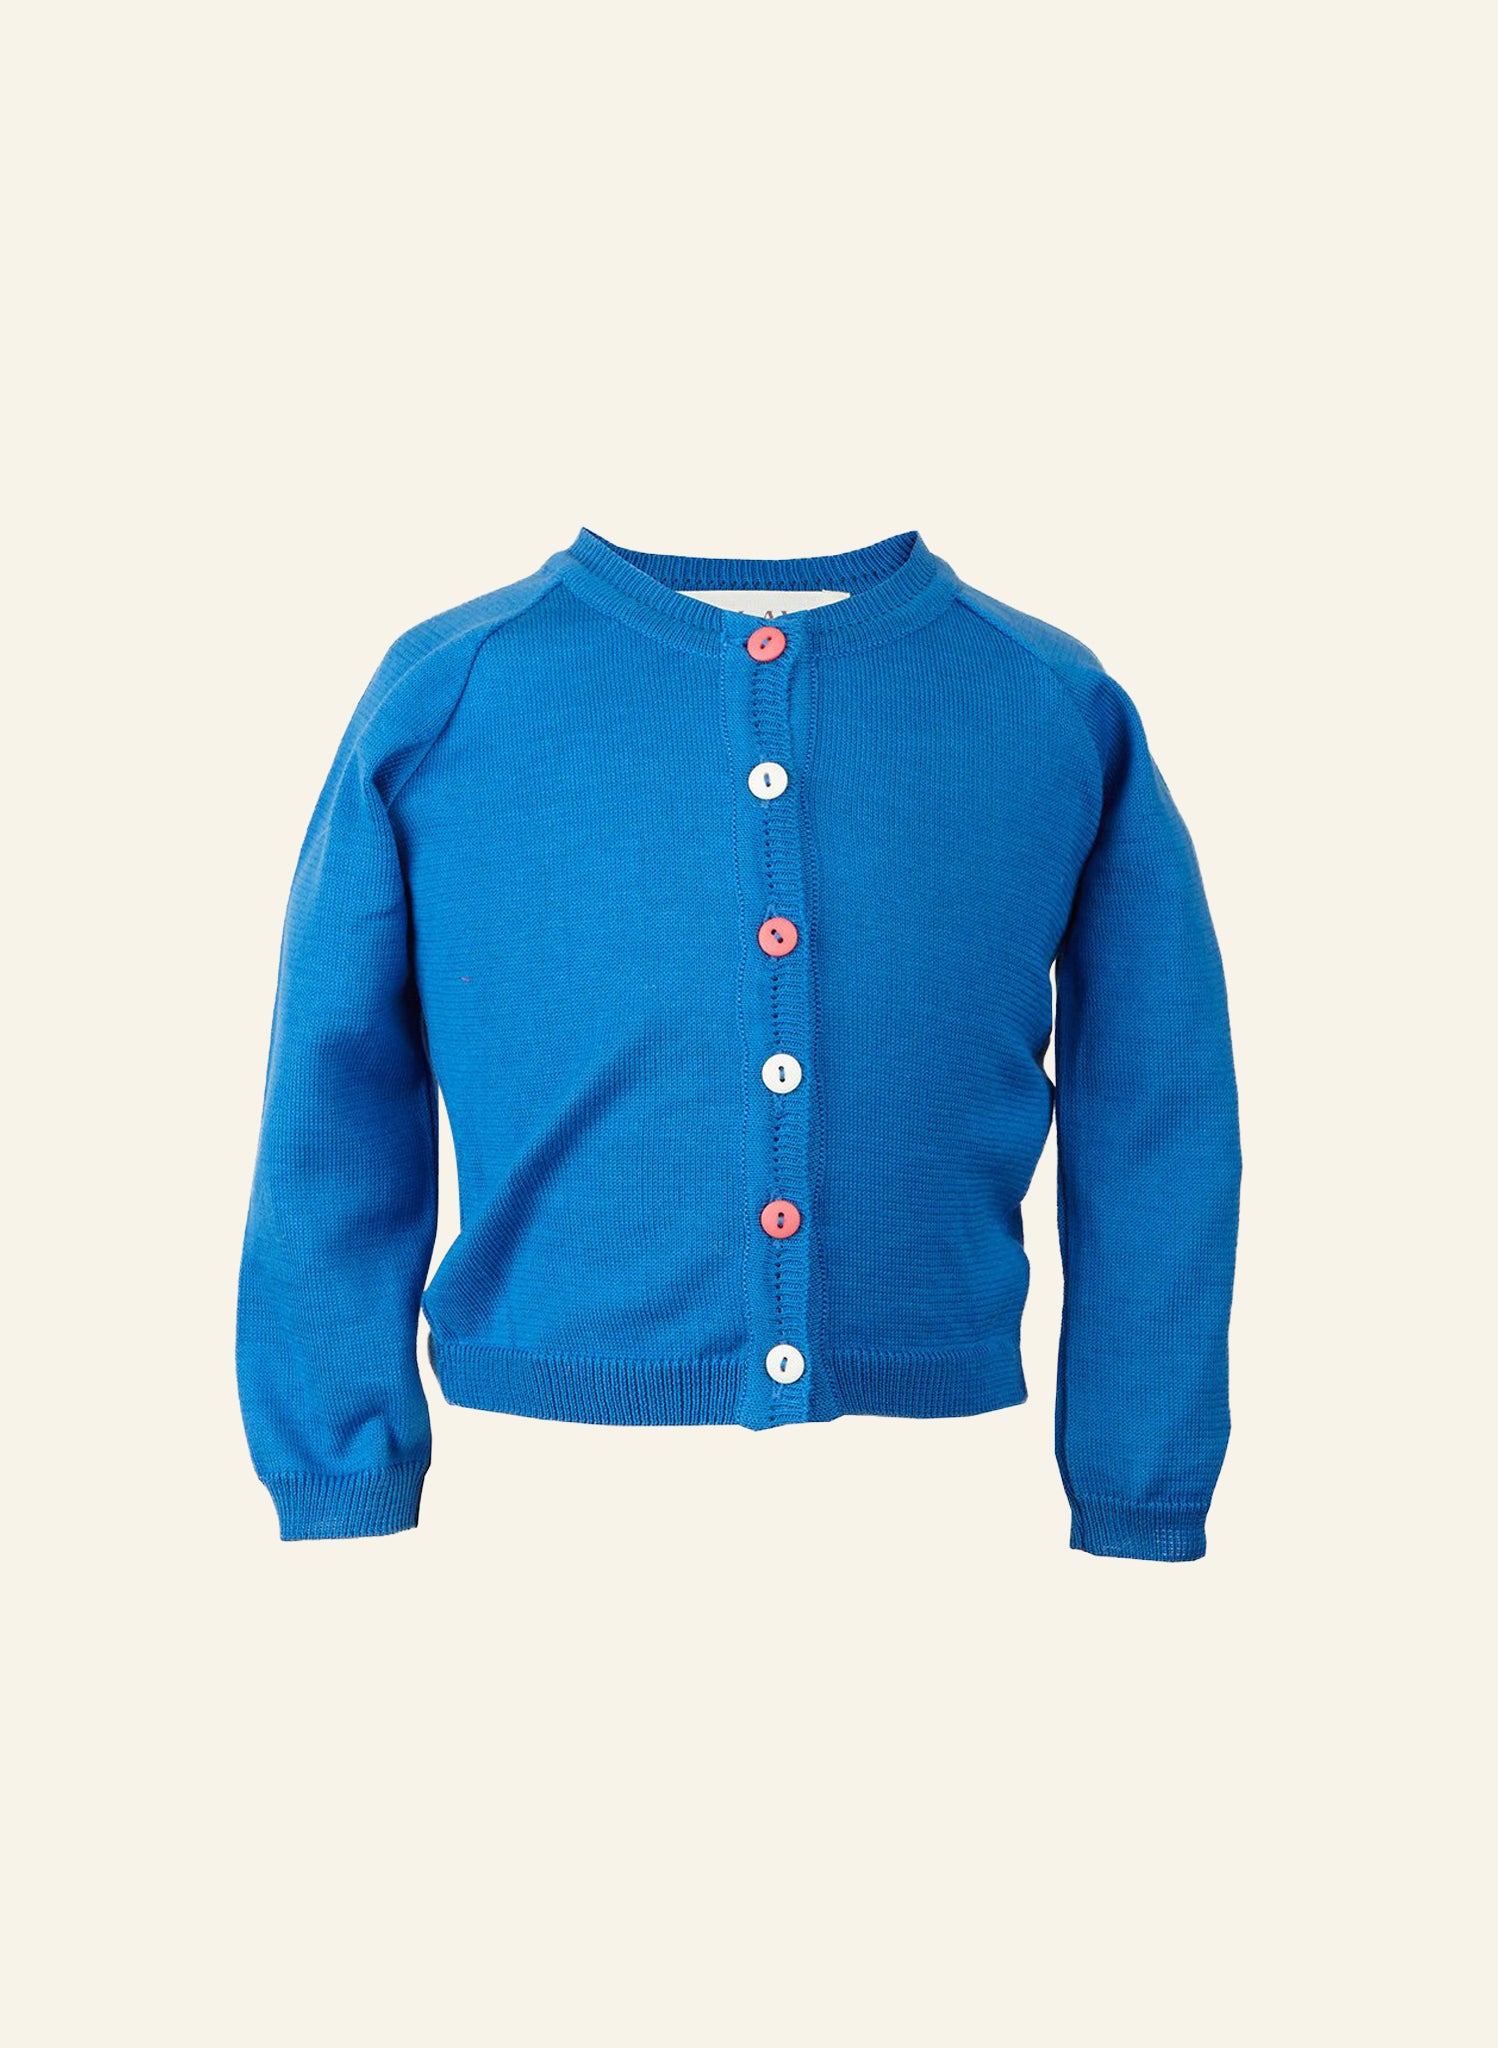 Children's Classic Cardigan - Royal Blue Cotton